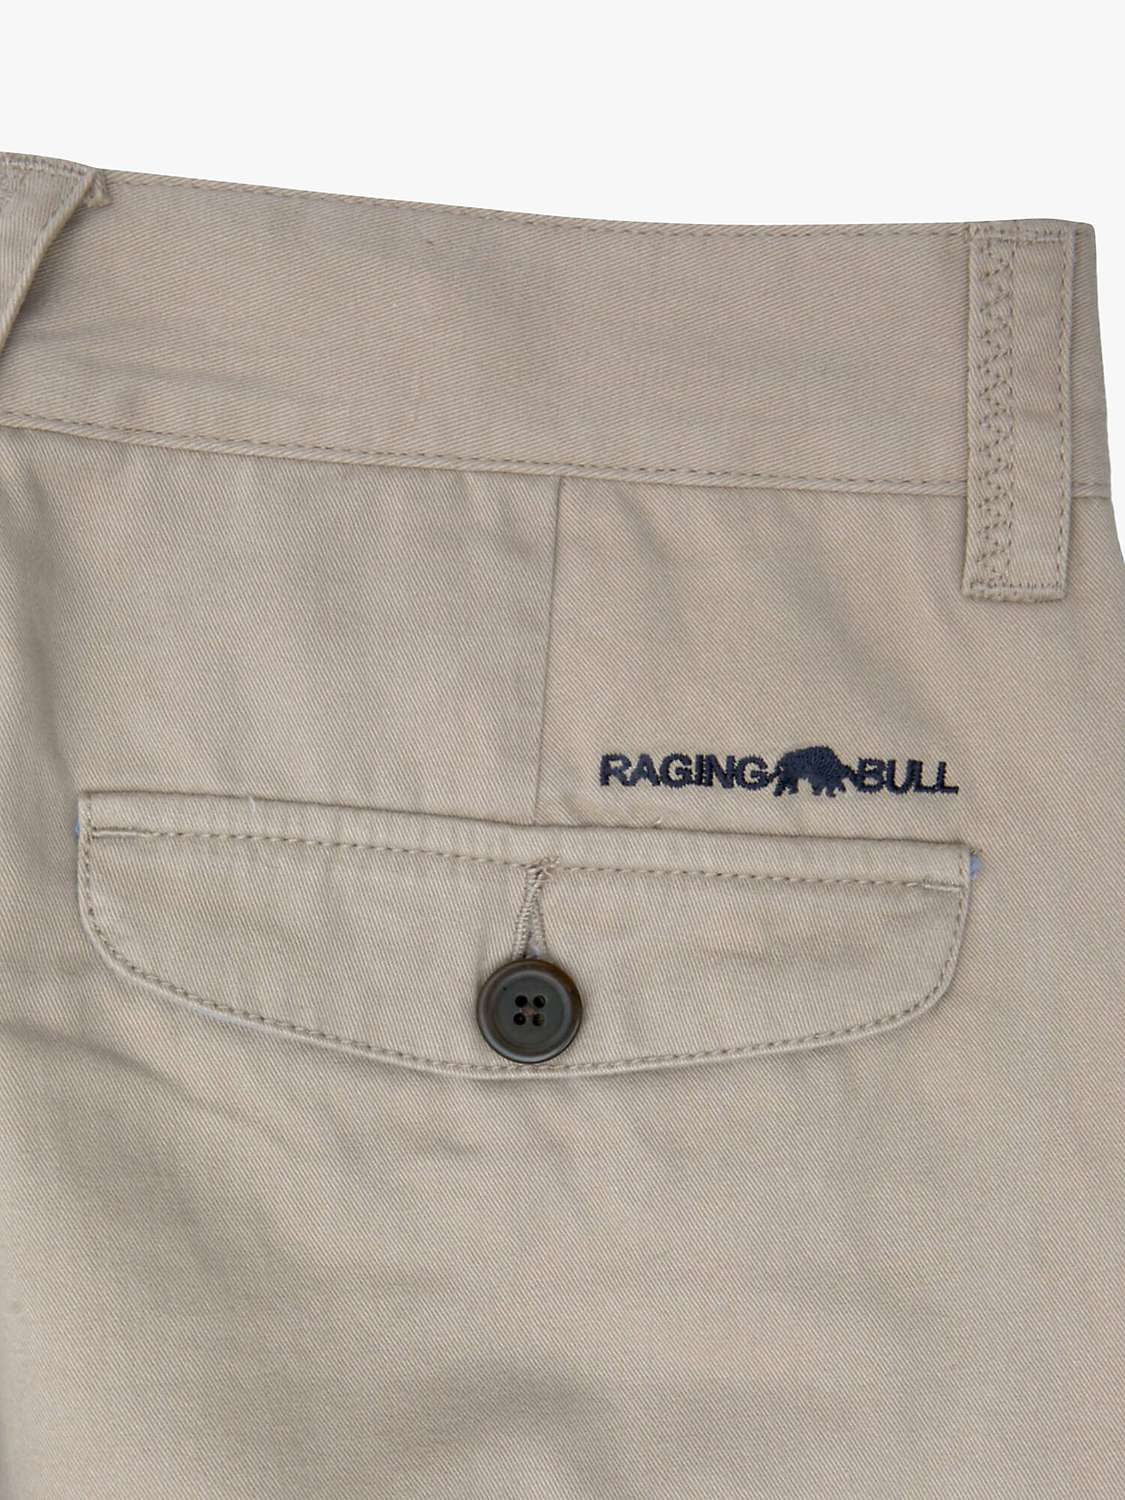 Buy Raging Bull Signature Cotton Chinos Online at johnlewis.com